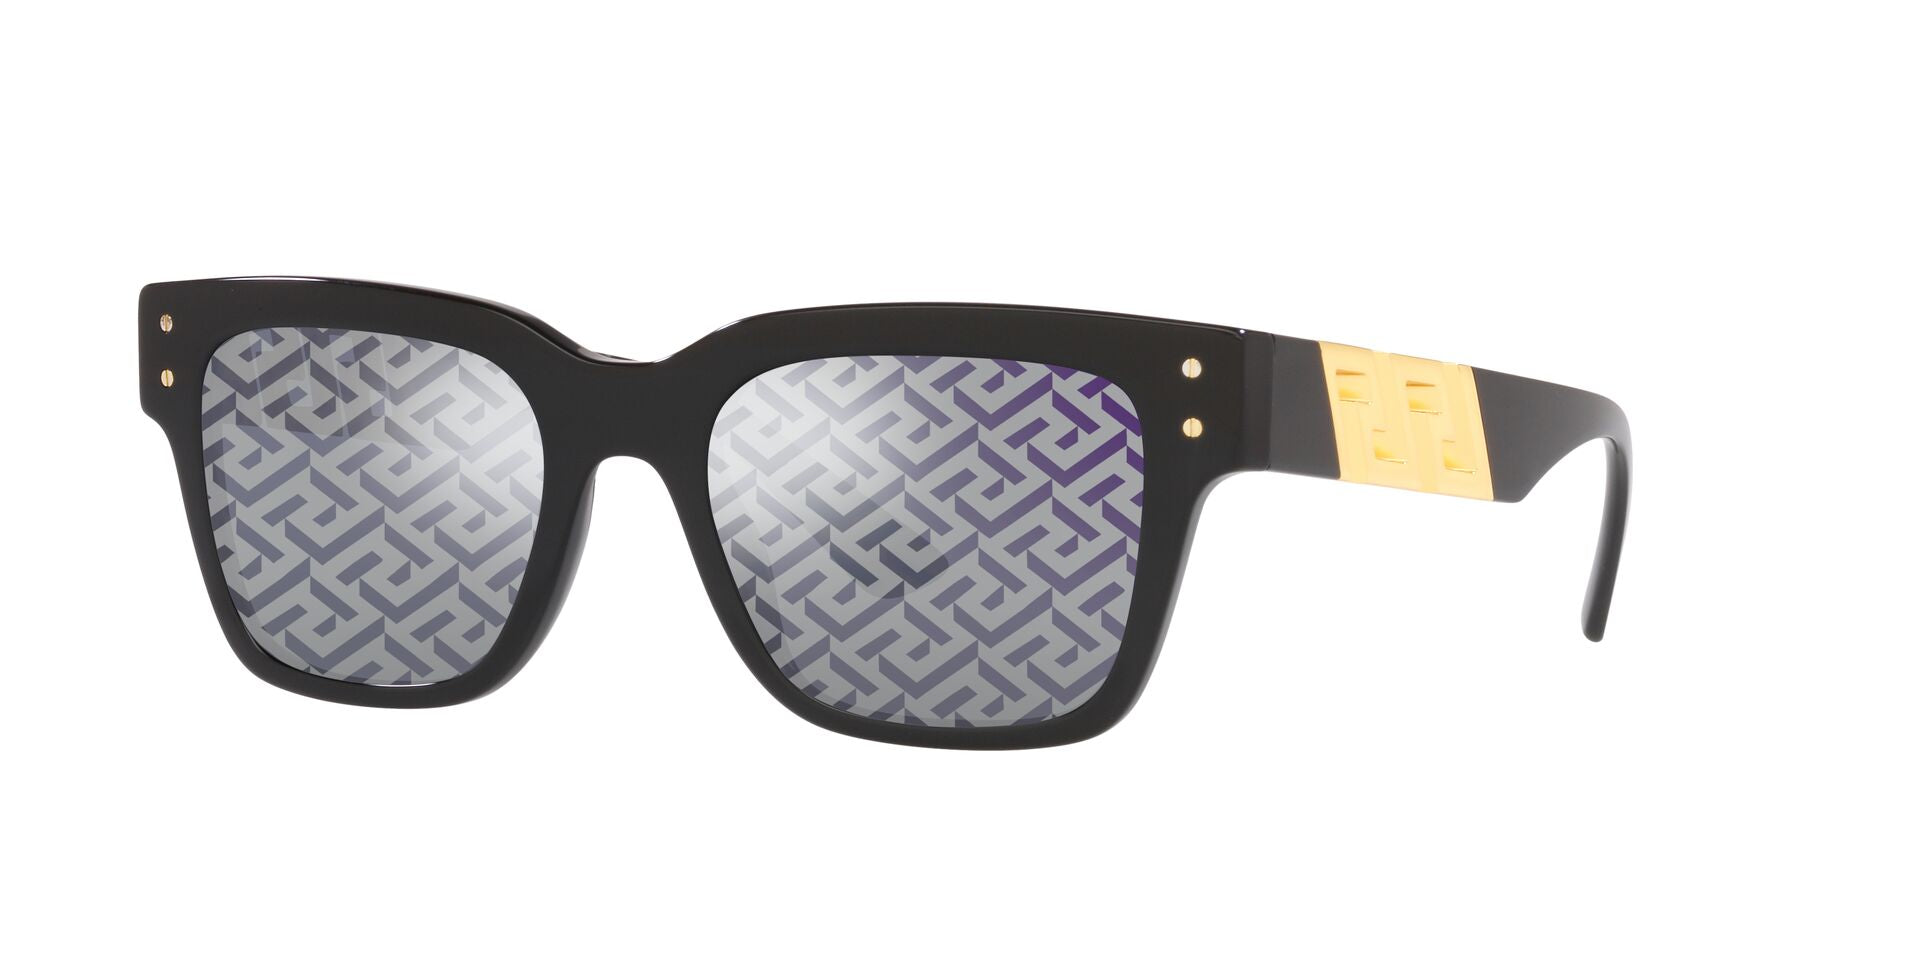 Louis Vuitton My Monogram Light Cat Eye Sunglasses Black Acetate & Metal. Size E